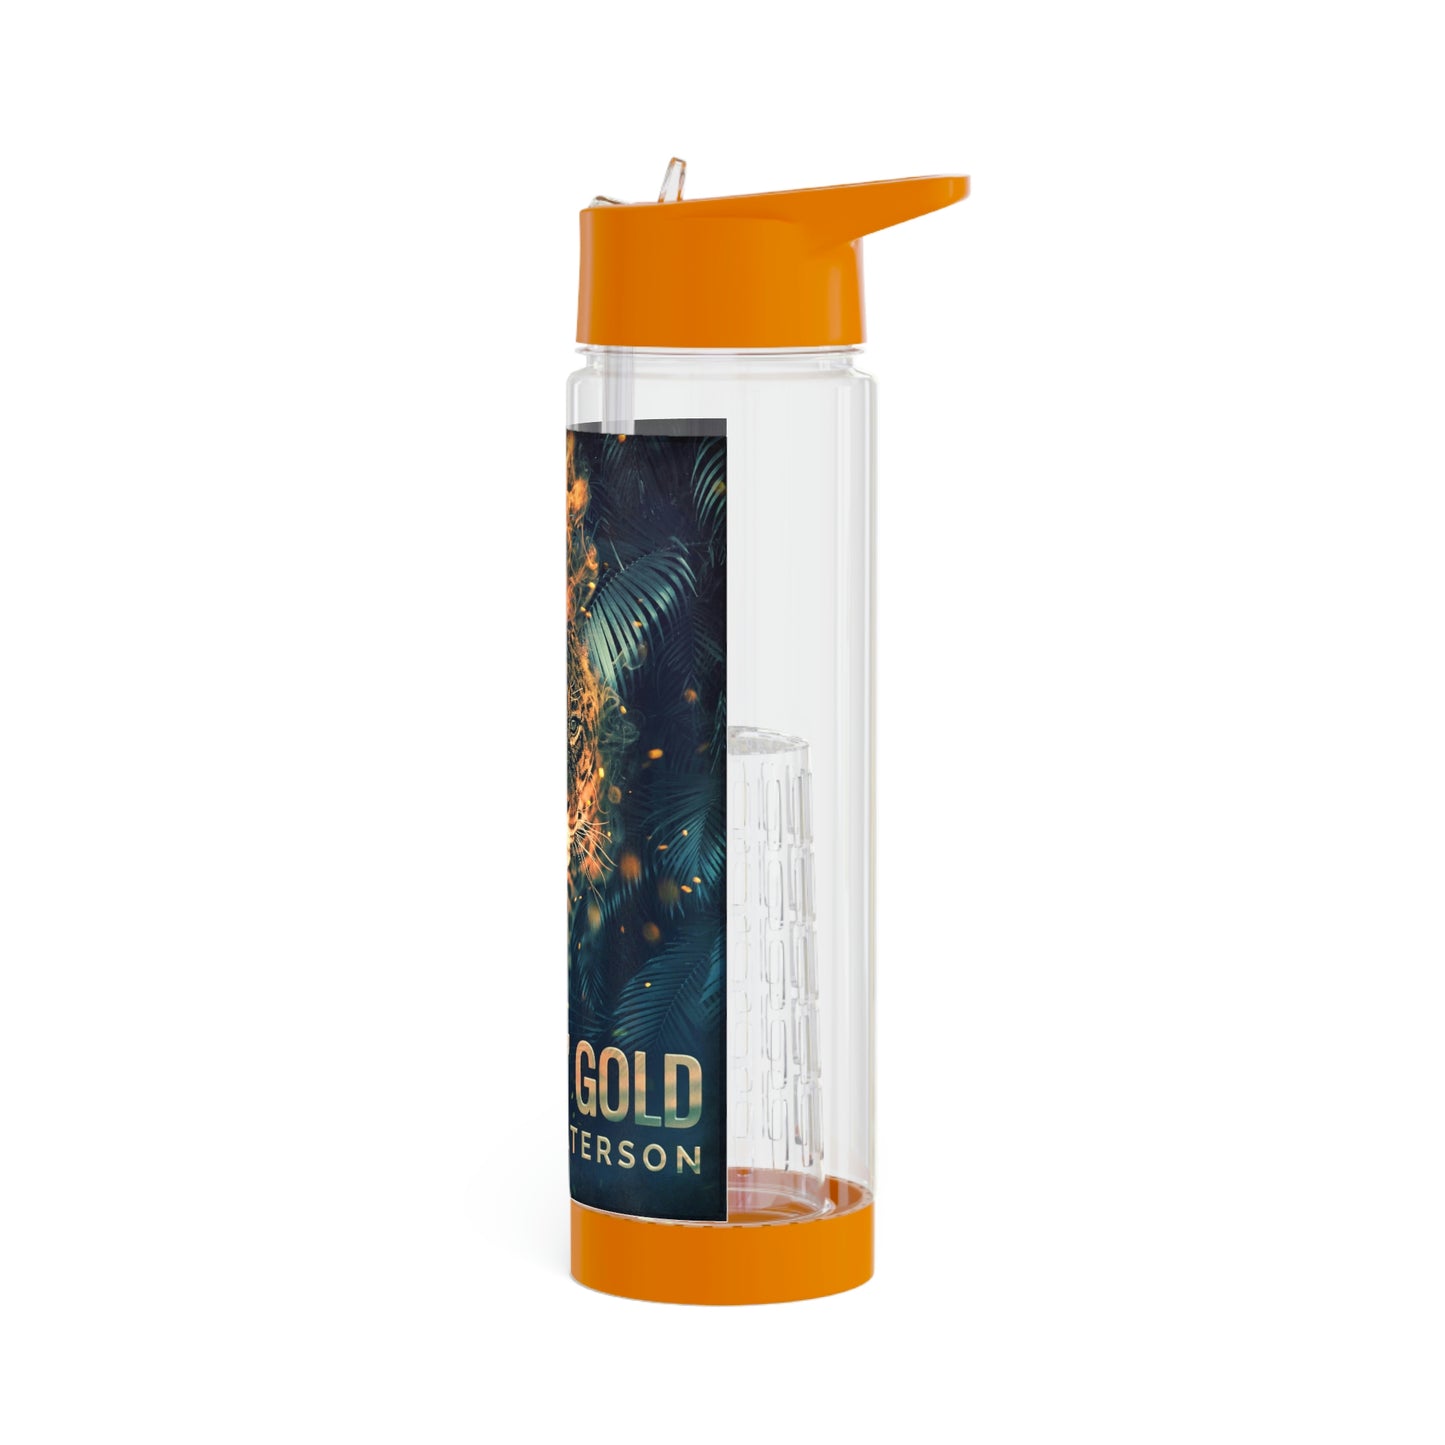 Spirits' Gold - Infuser Water Bottle